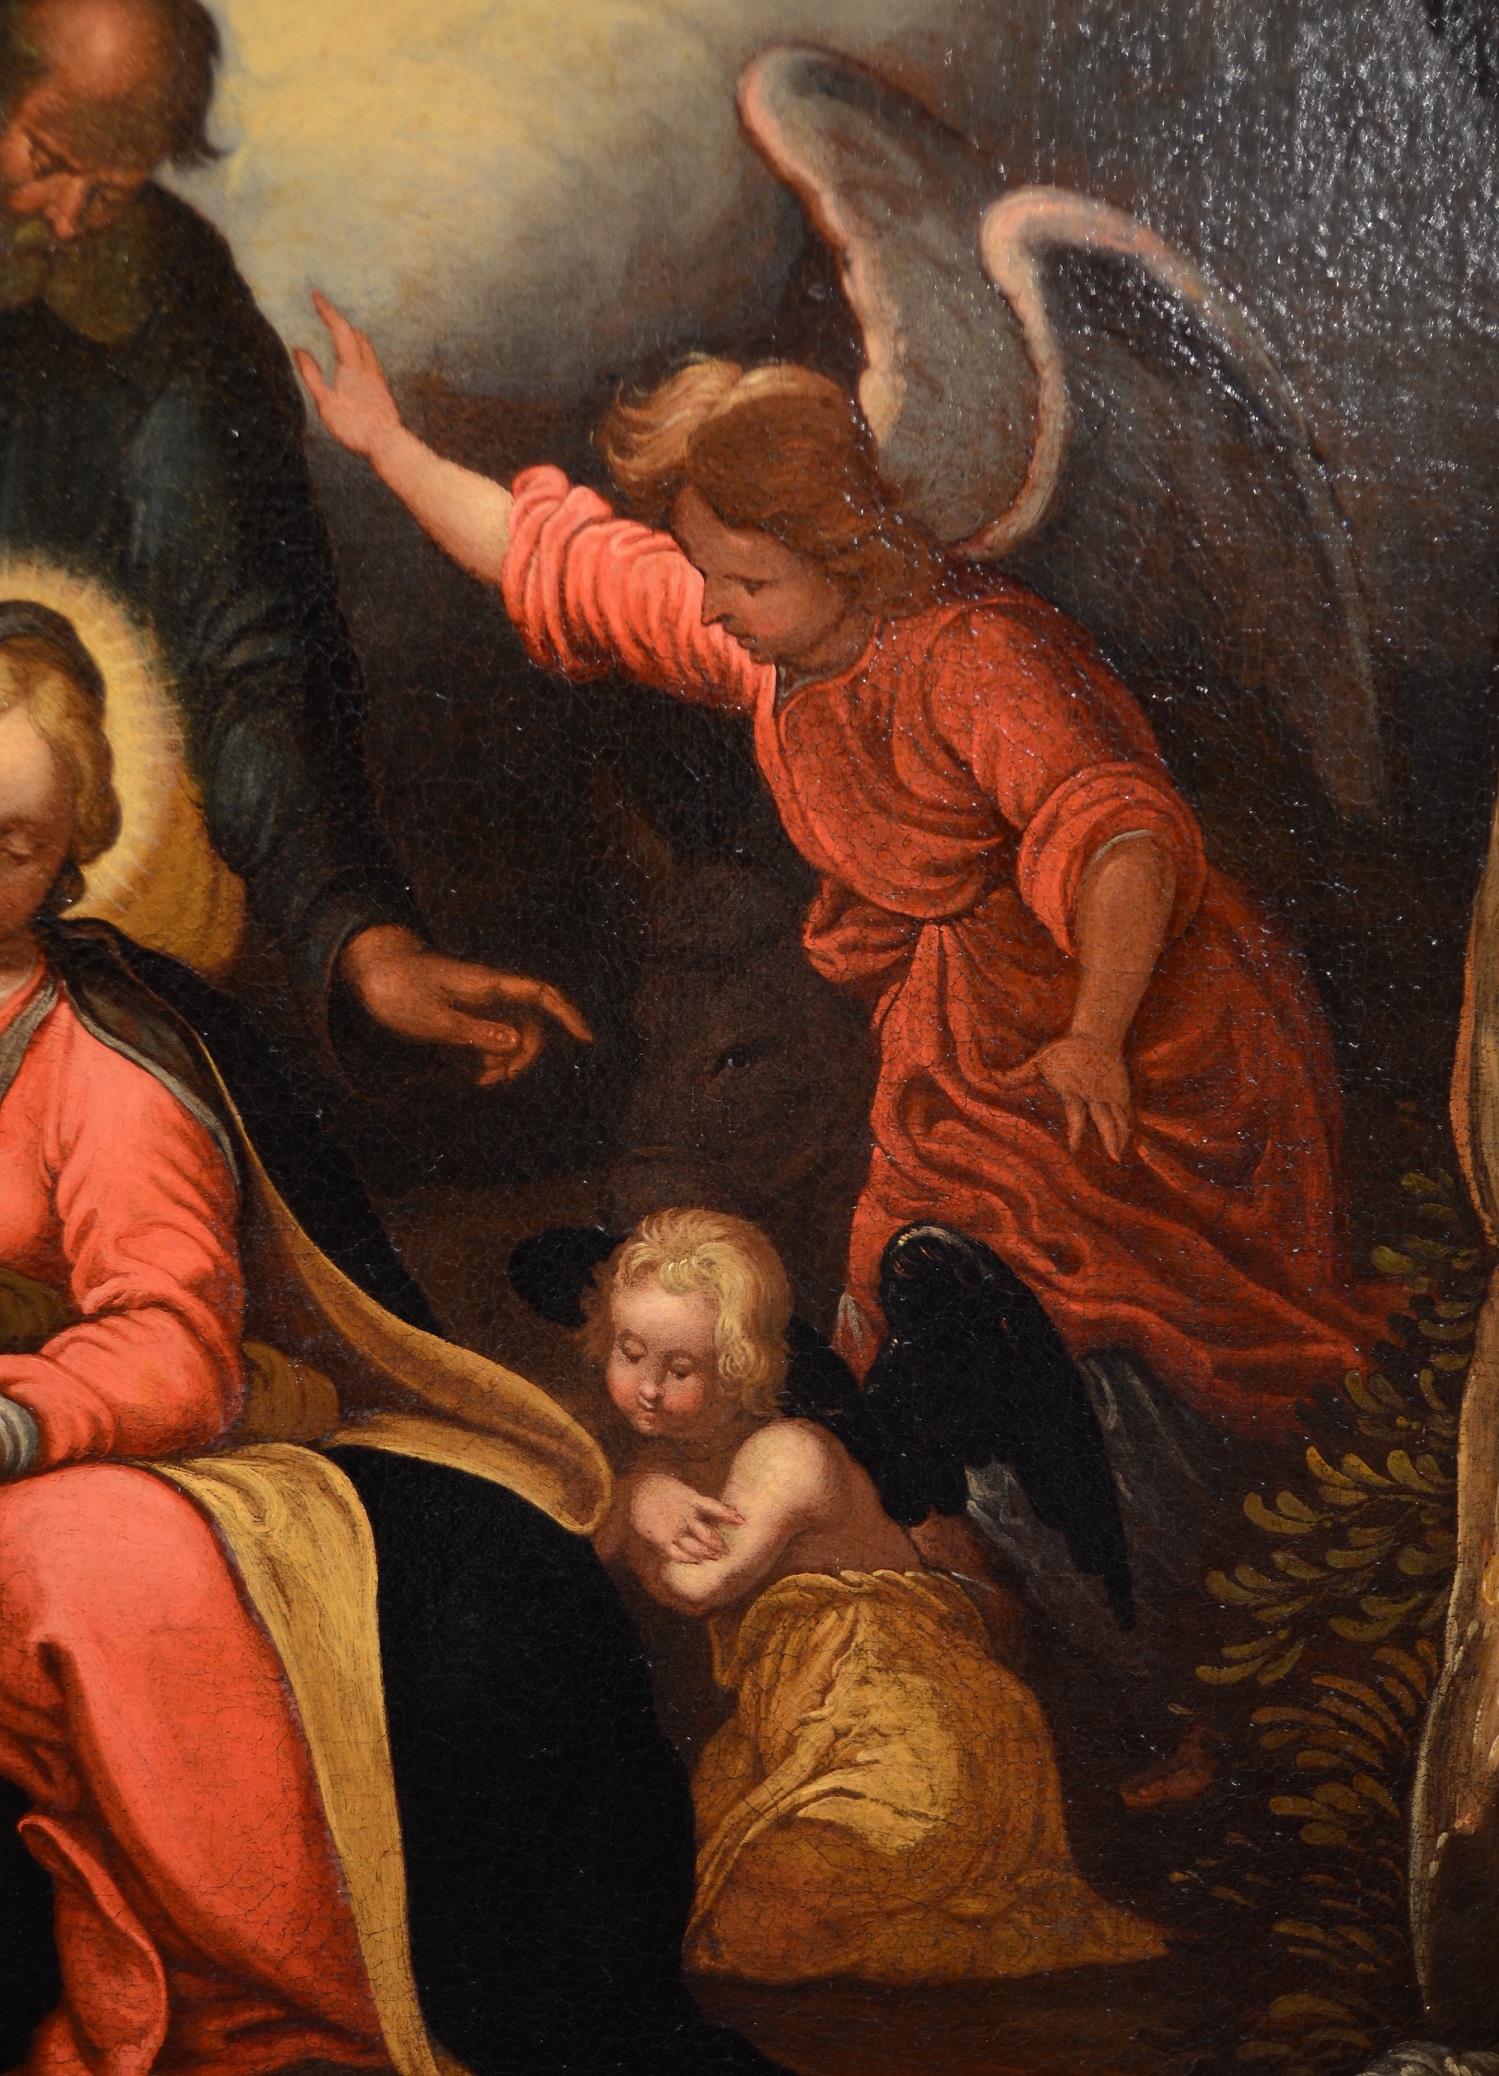 Holy Family Paint Oil on canvas Old master 17th Century Roma school Italy Art 4